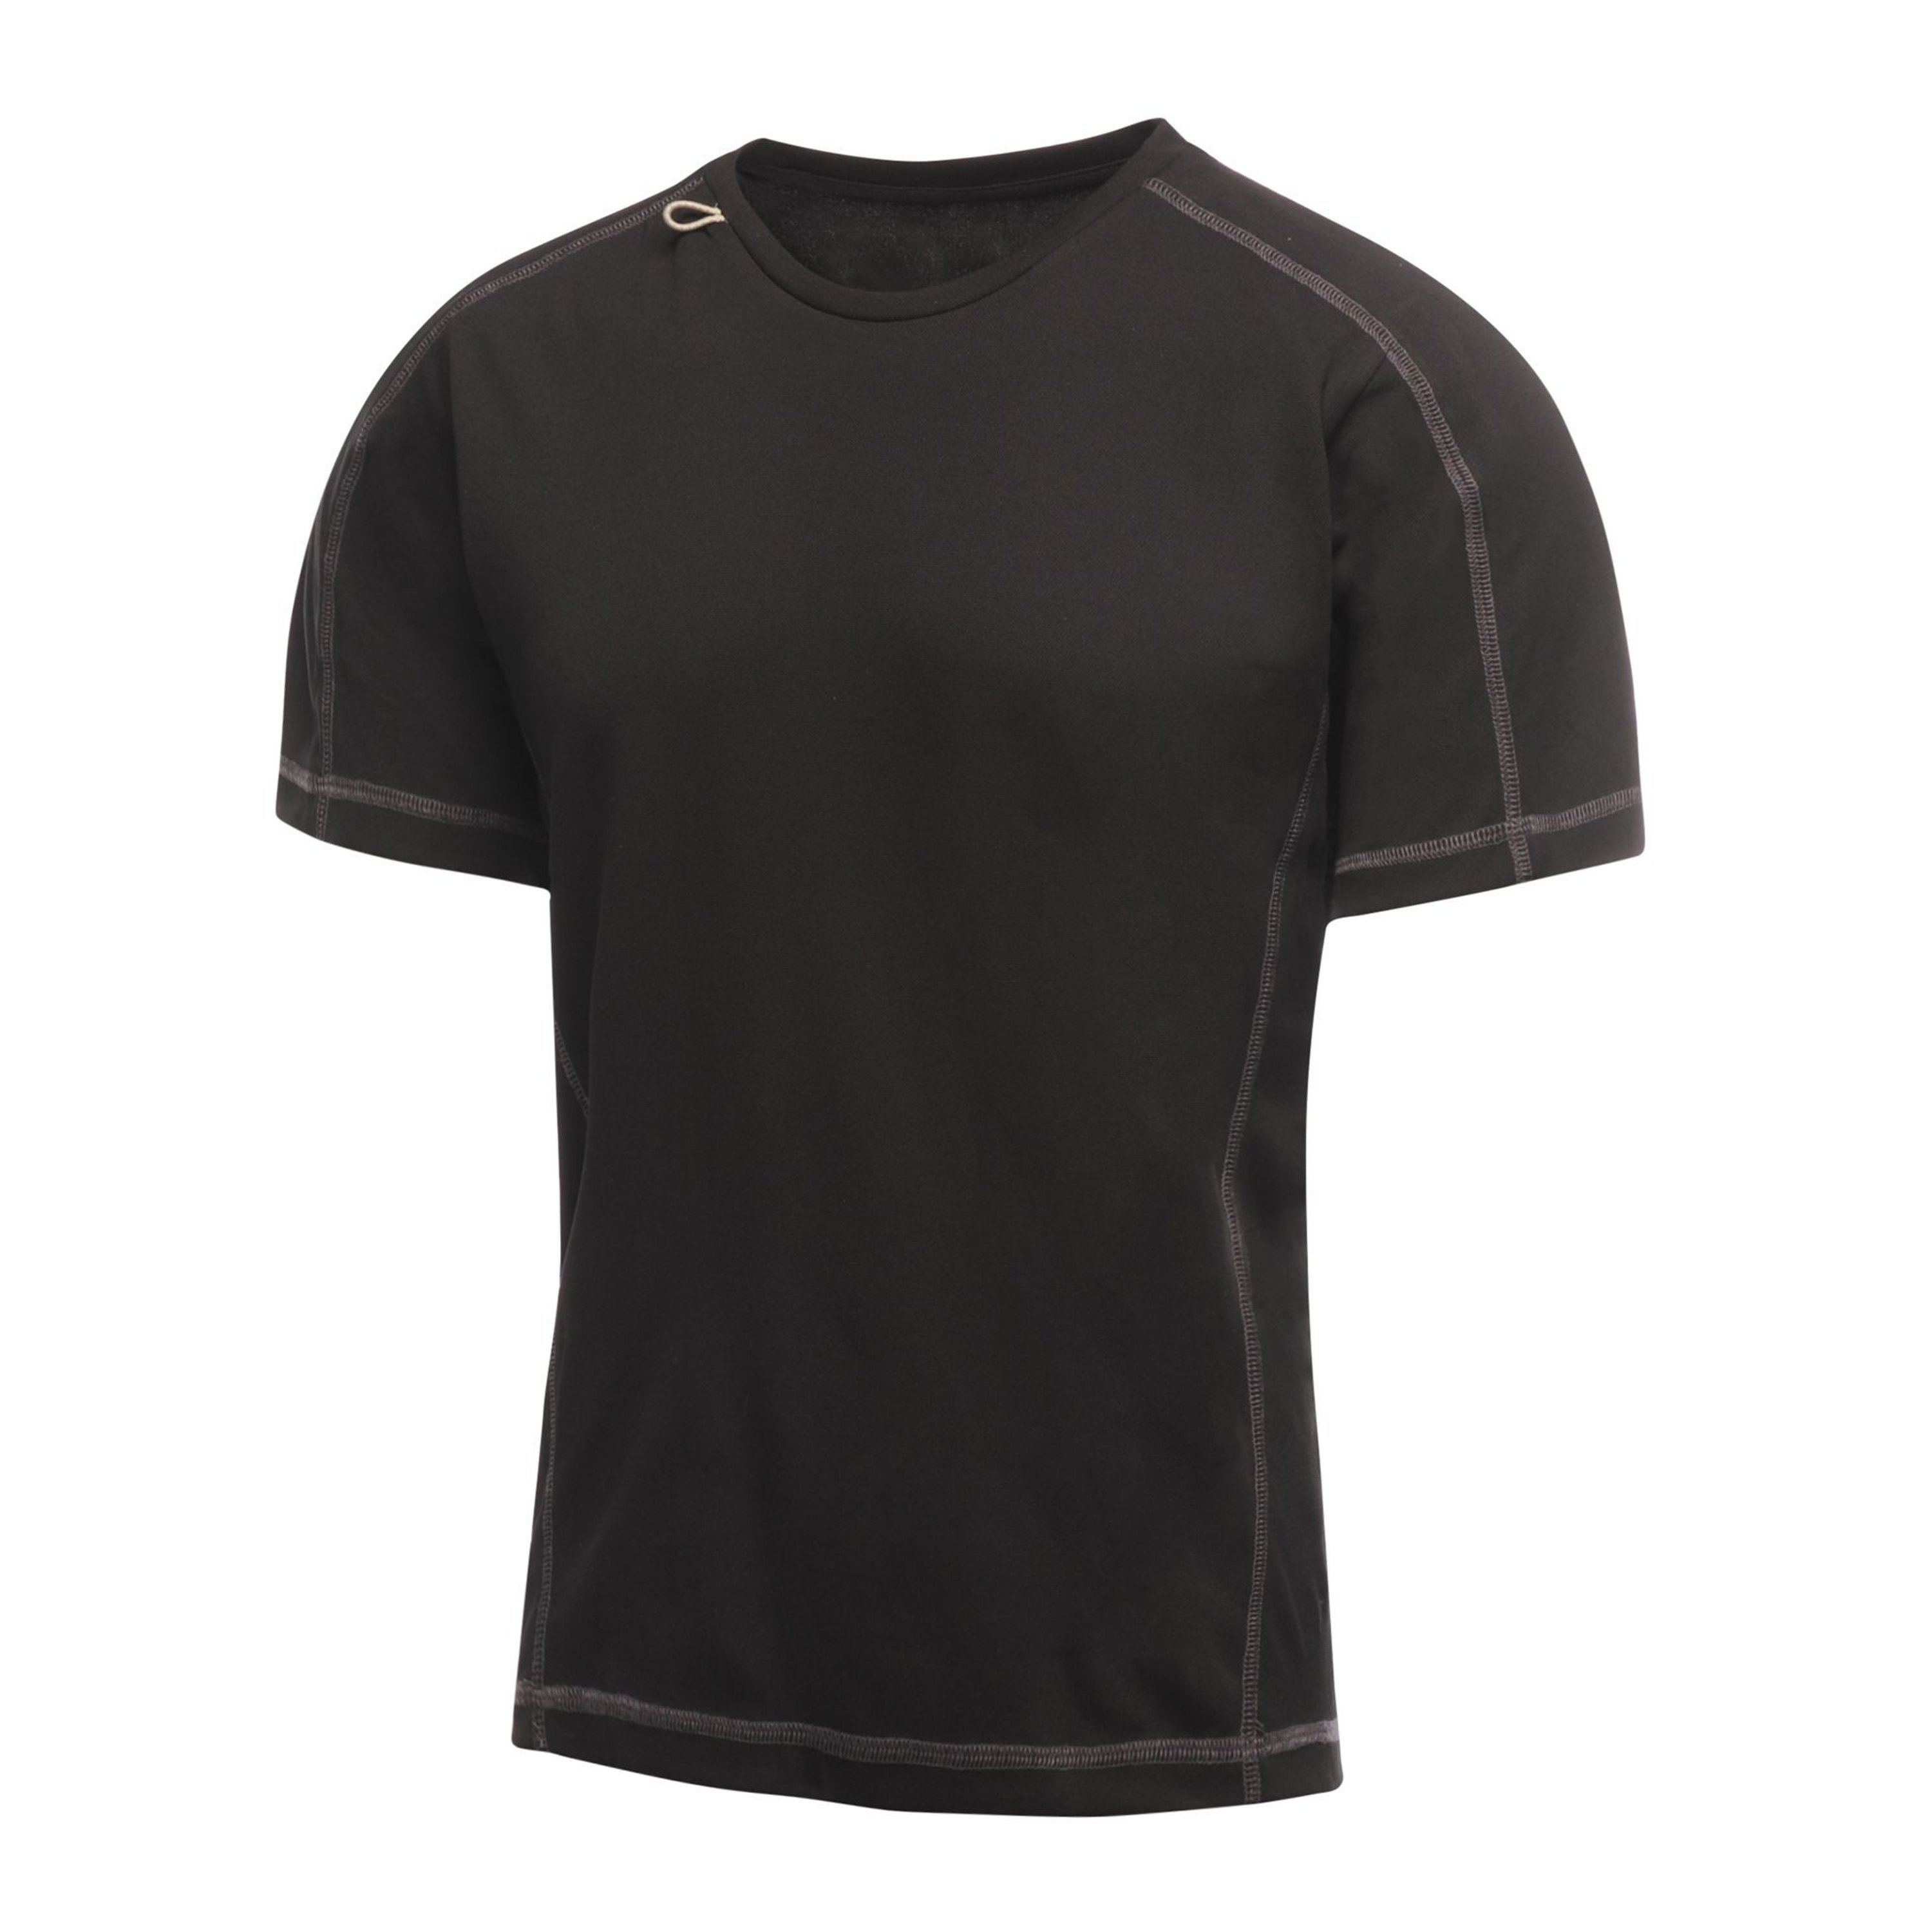 Details about   Regatta Activewear Beijing T-Shirt Iron/Black 